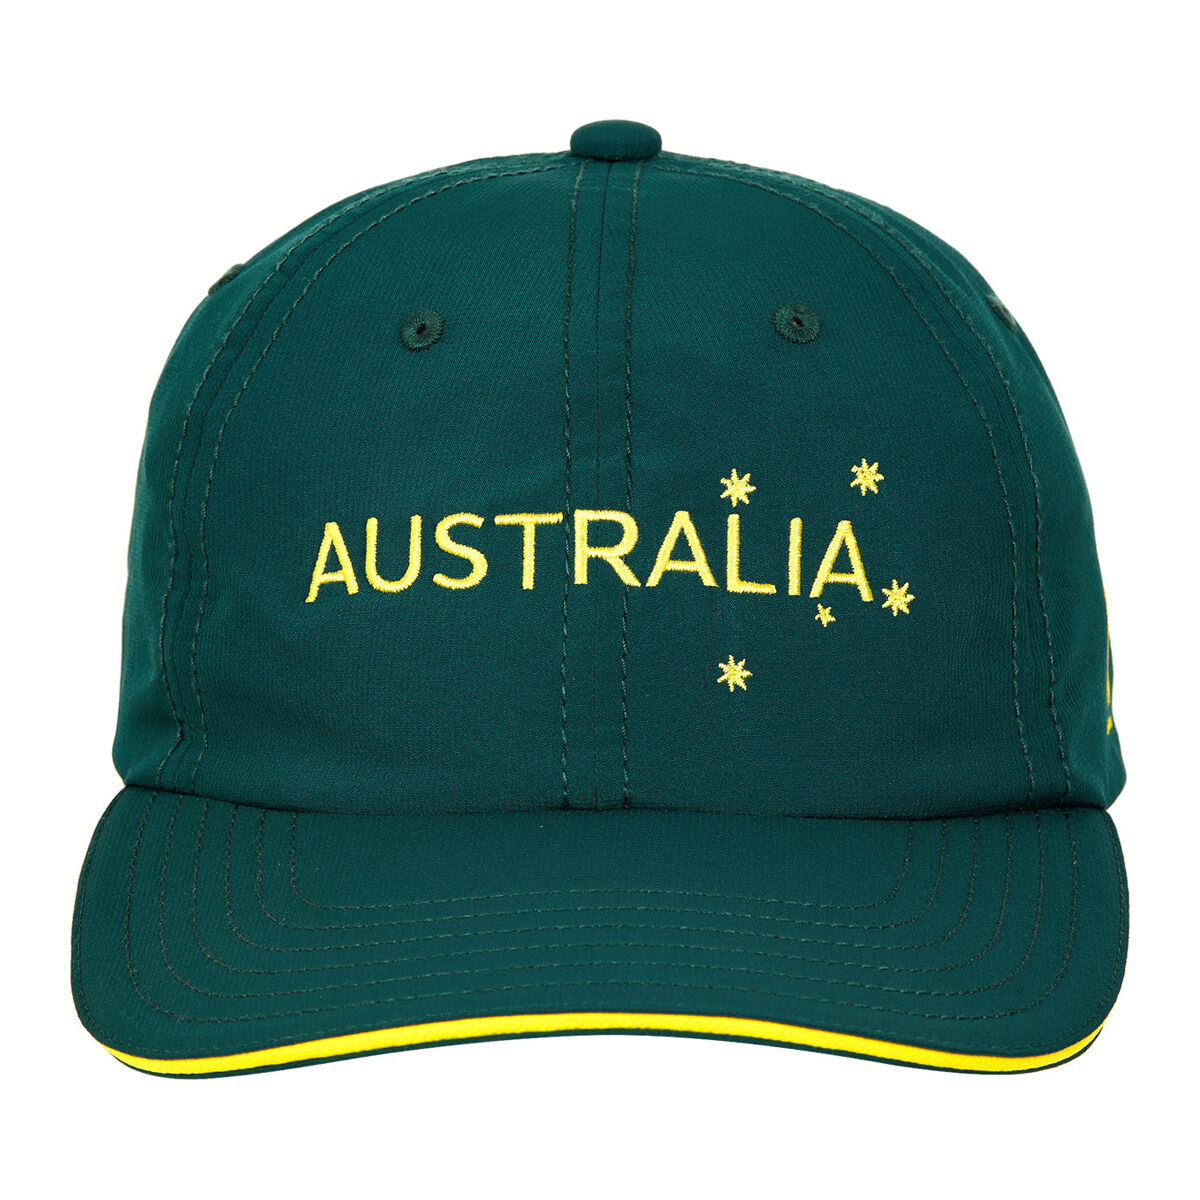 MLB Hats  MLB Shop Online  Buy MLB Hats Online in Australia